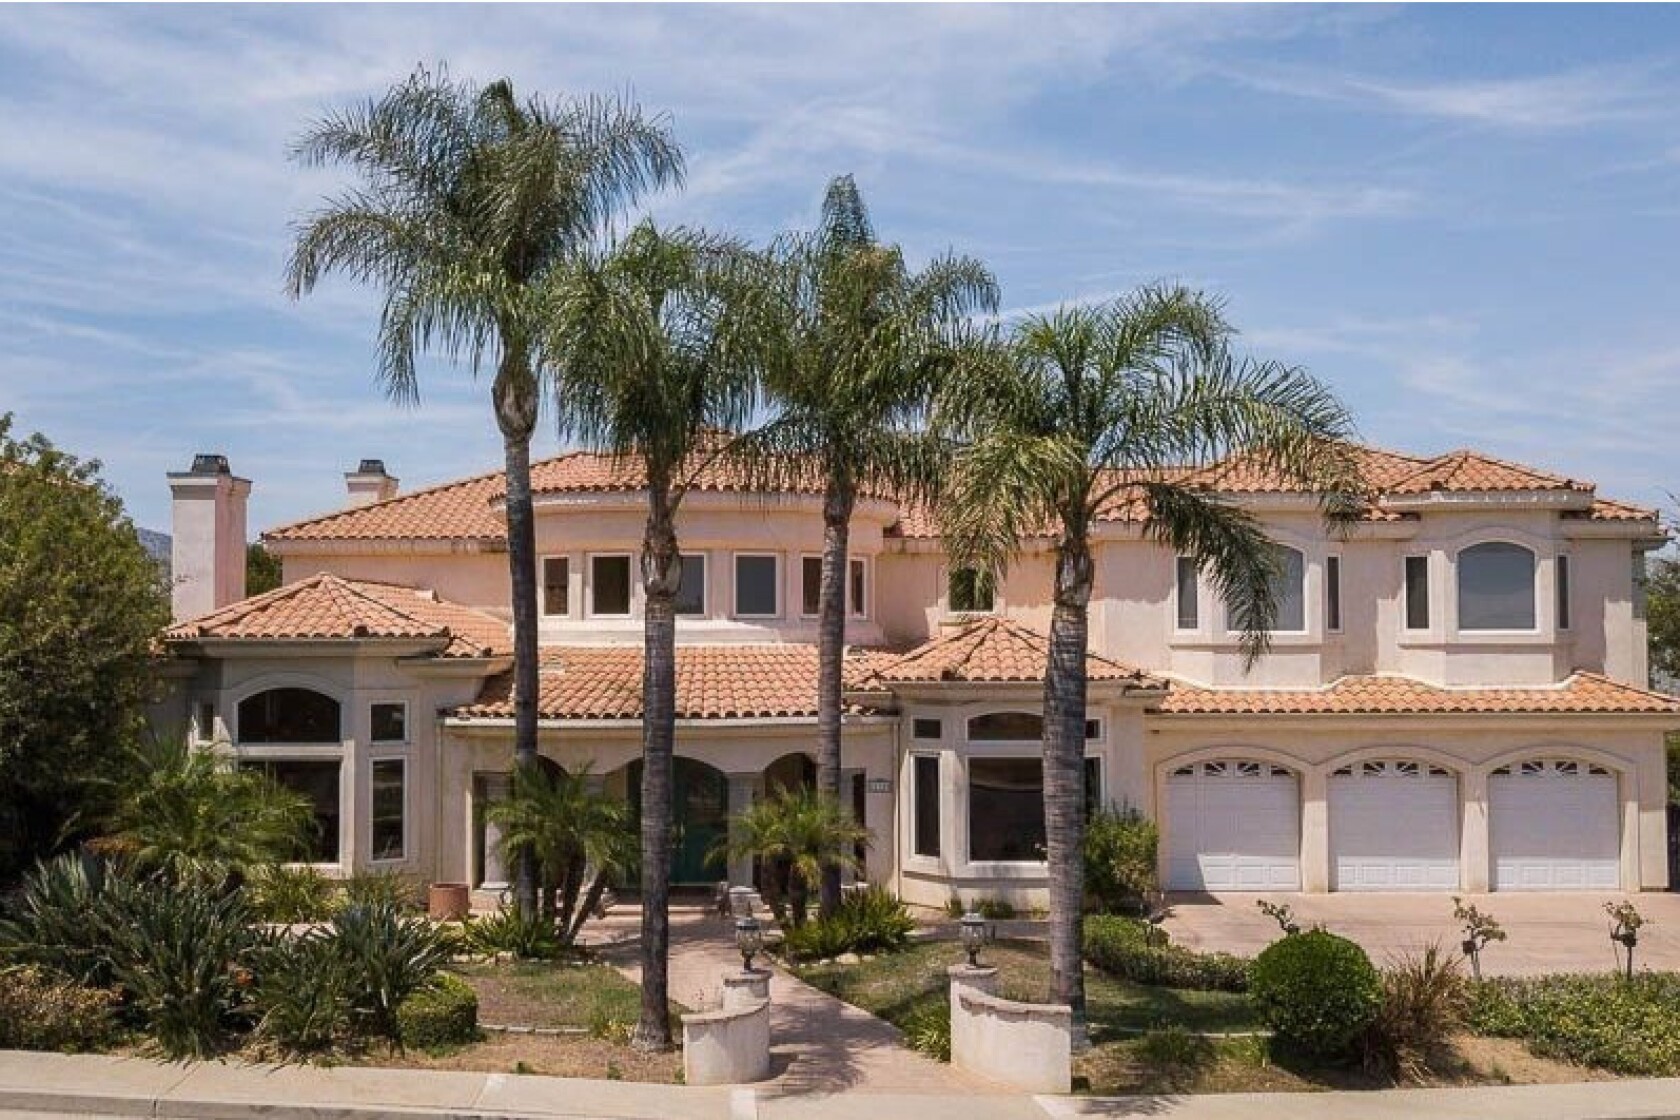 Casa de Swae Lee em Whittier, California, United States